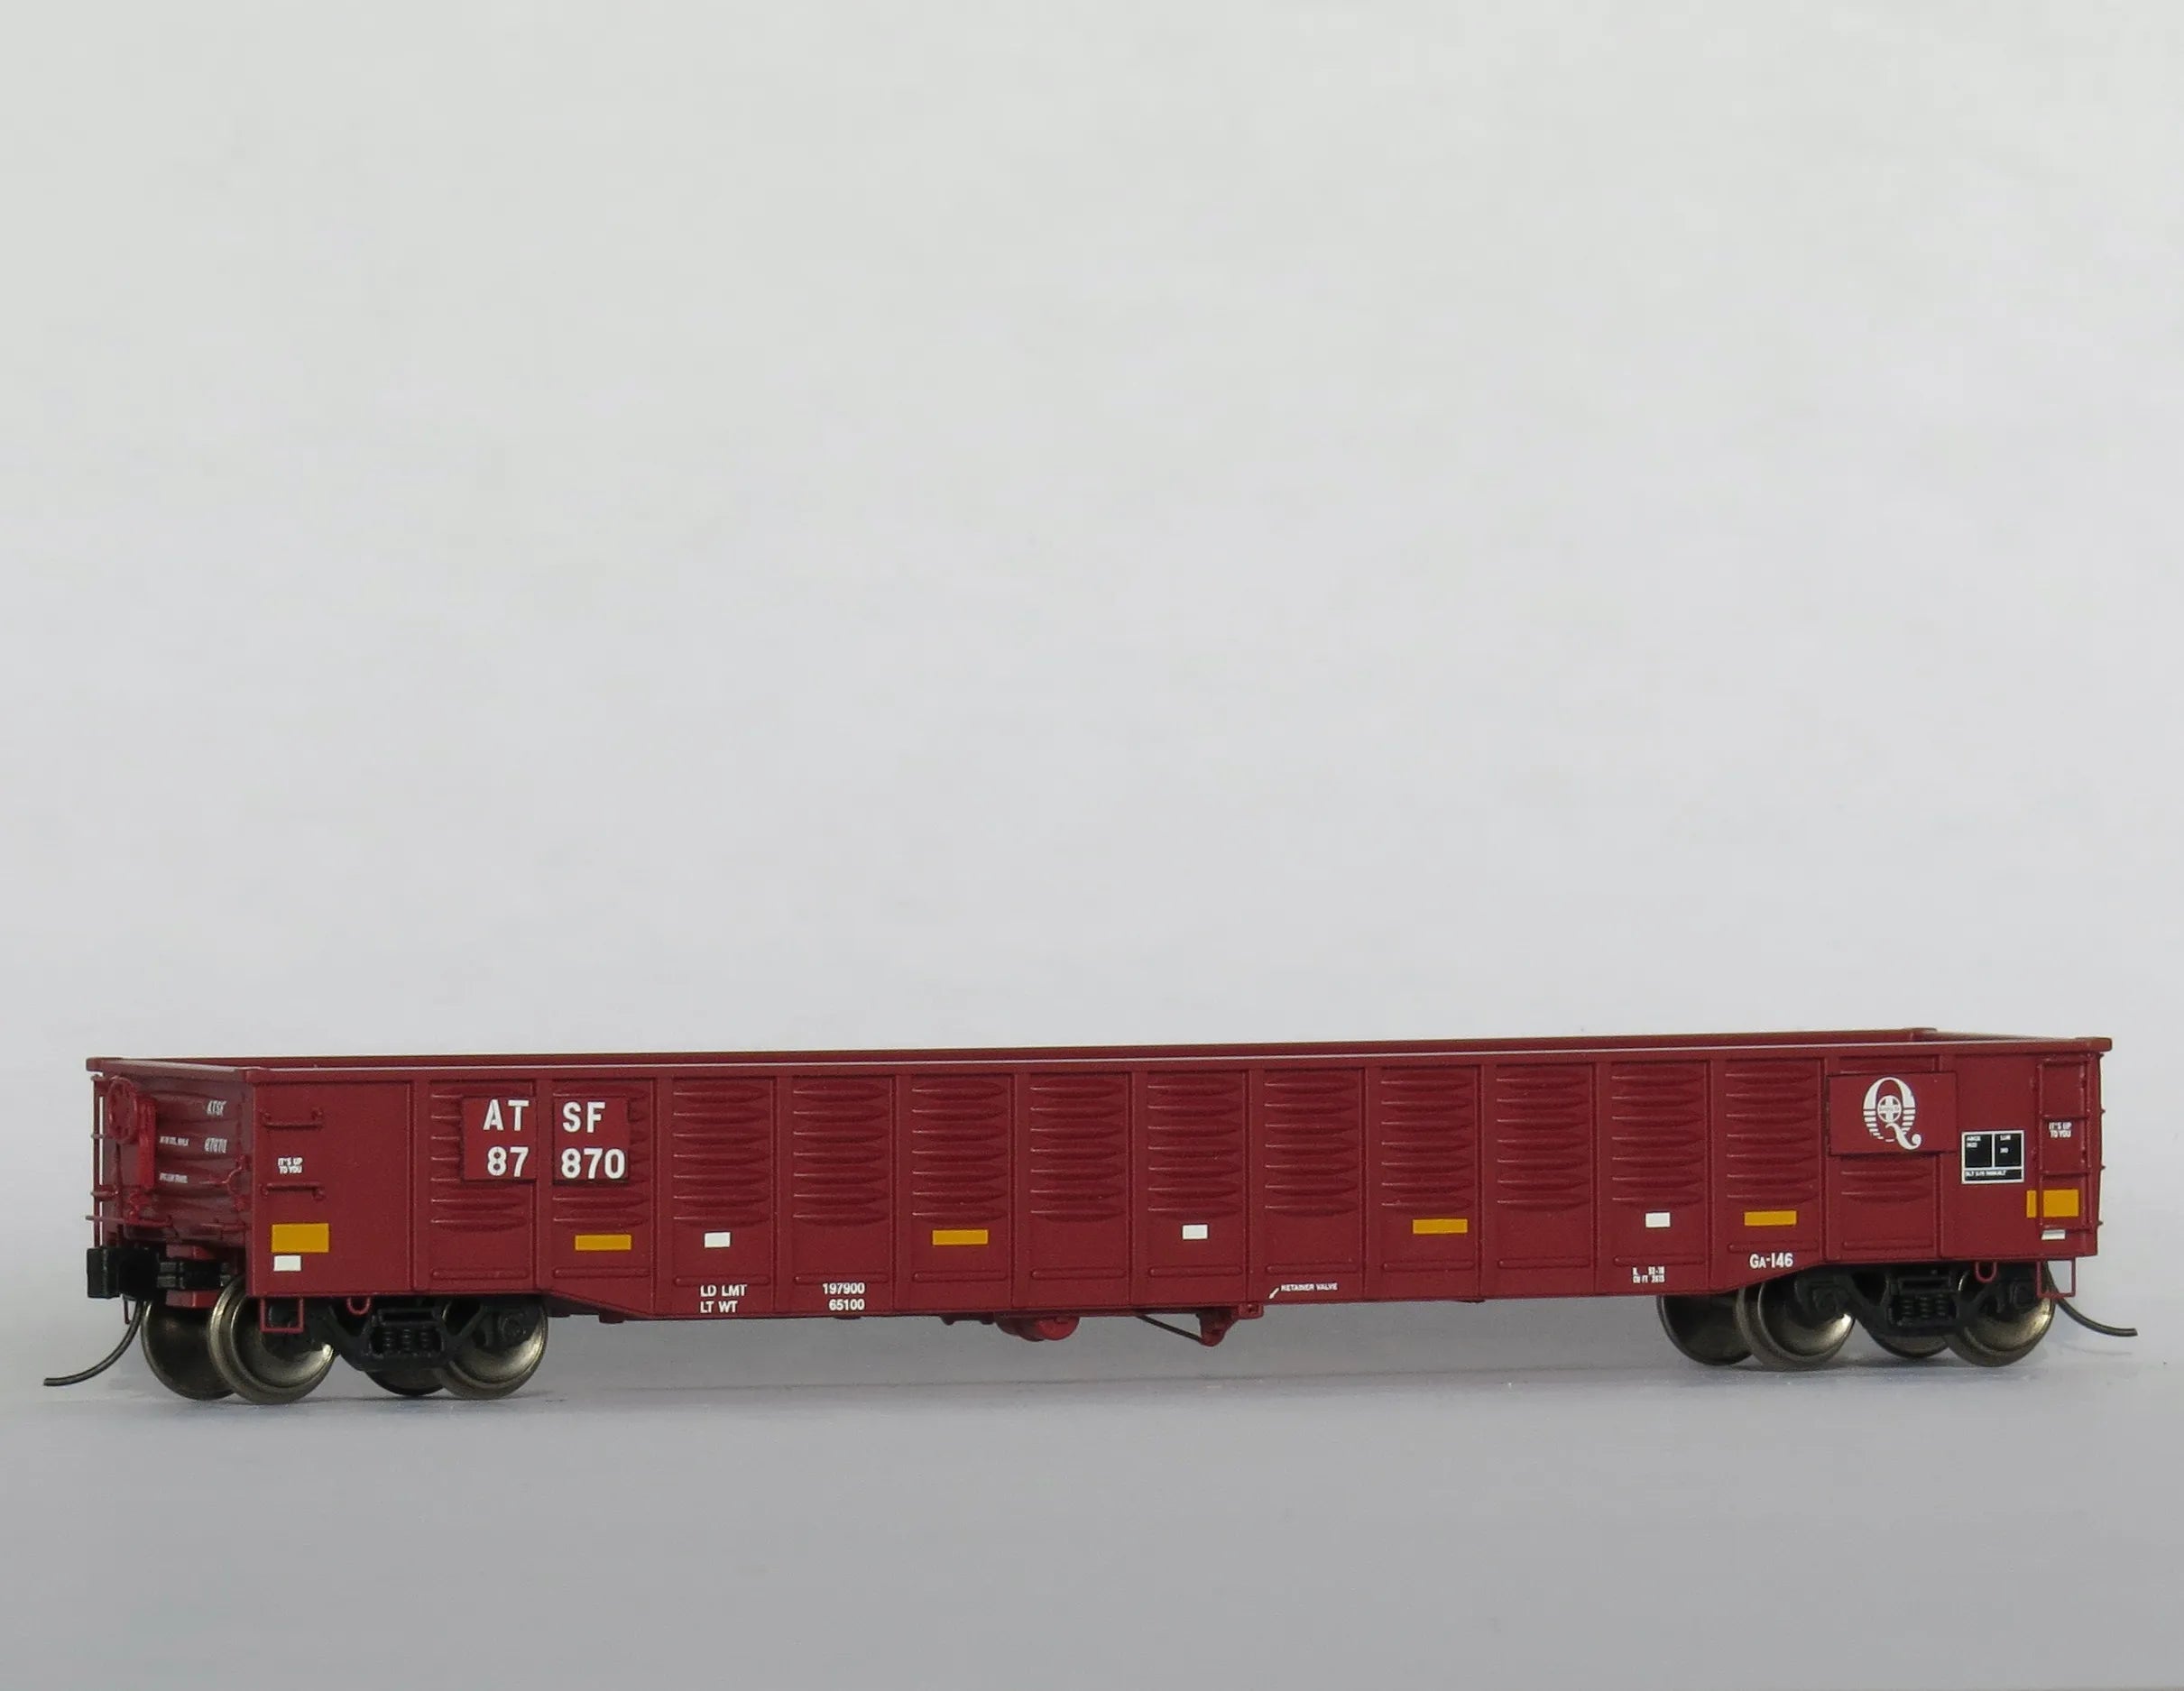 Trainworx 2522516 N Scale, 52' Gondola, Santa Fe #87870